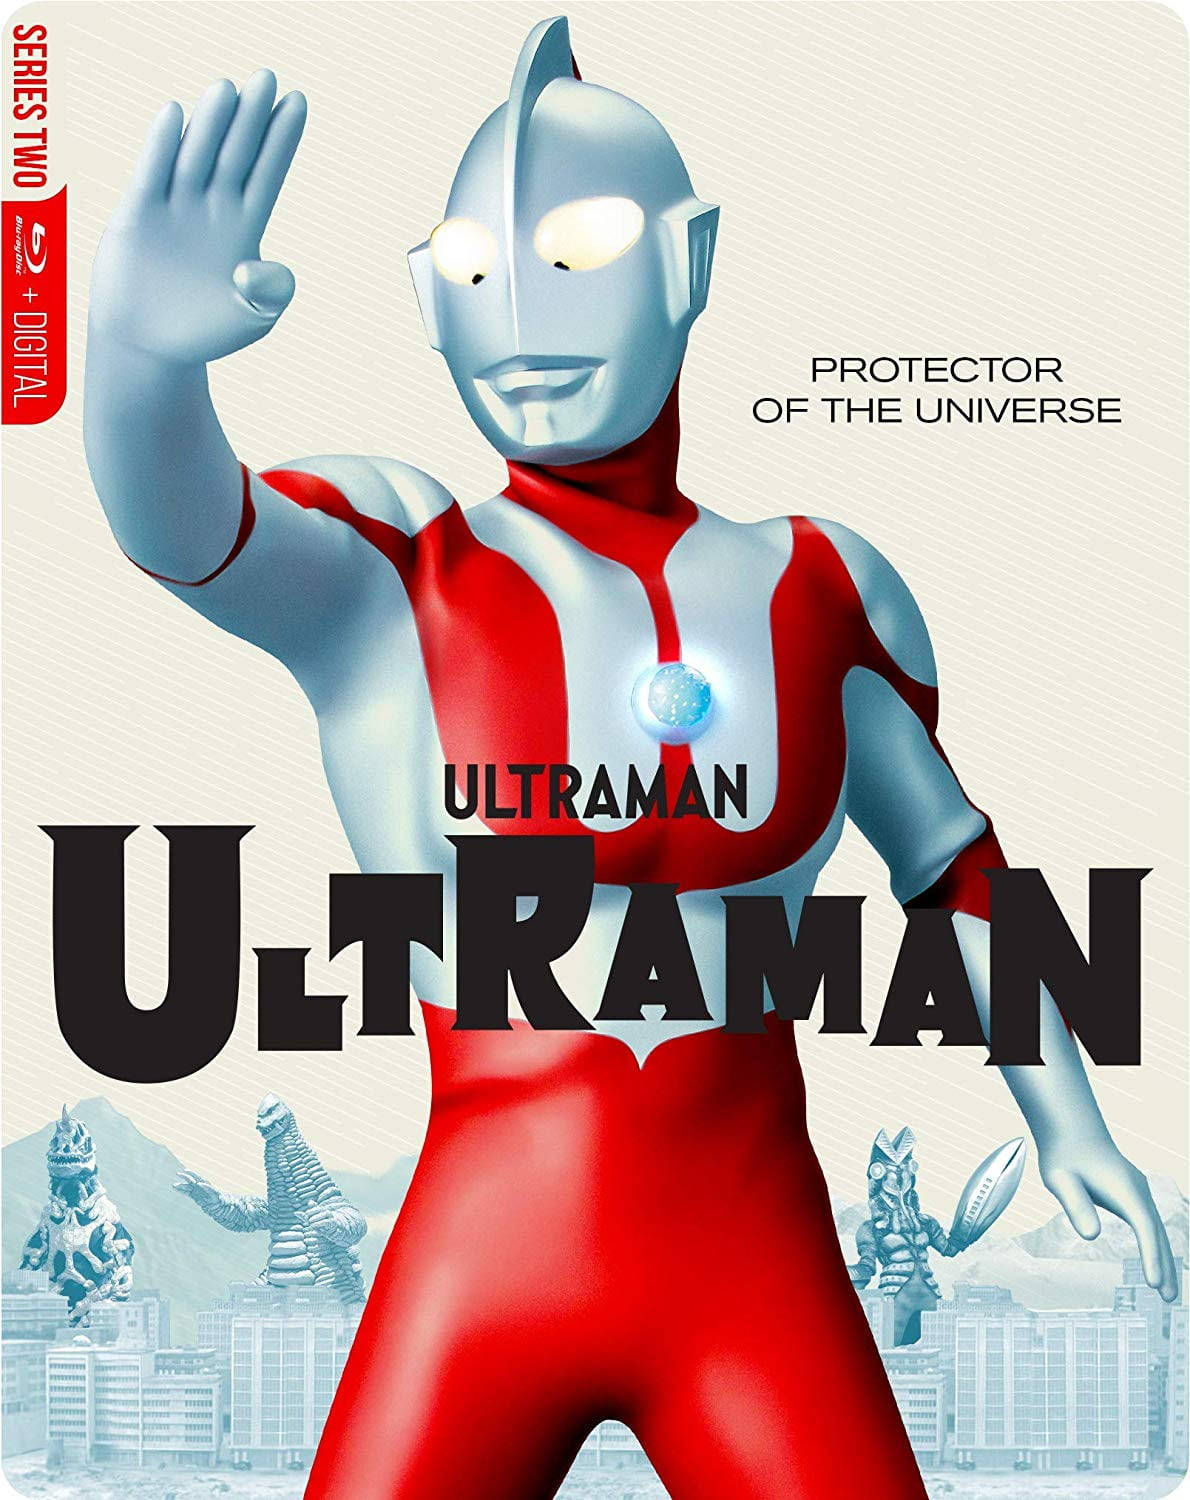 Ultramander Ultimative Held Wallpaper